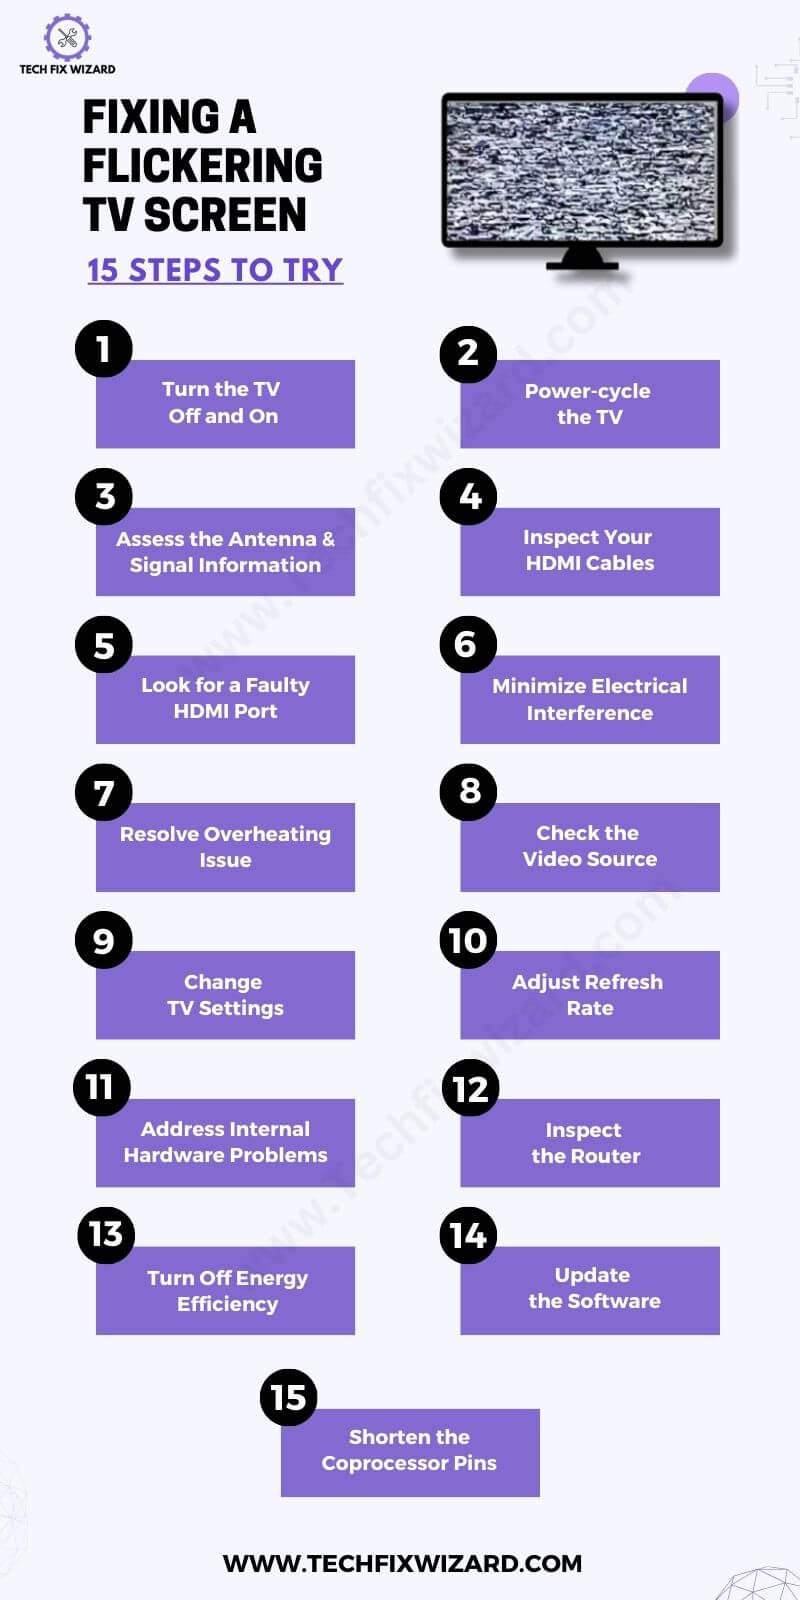 Fix A Flickering TV Screen Infographic